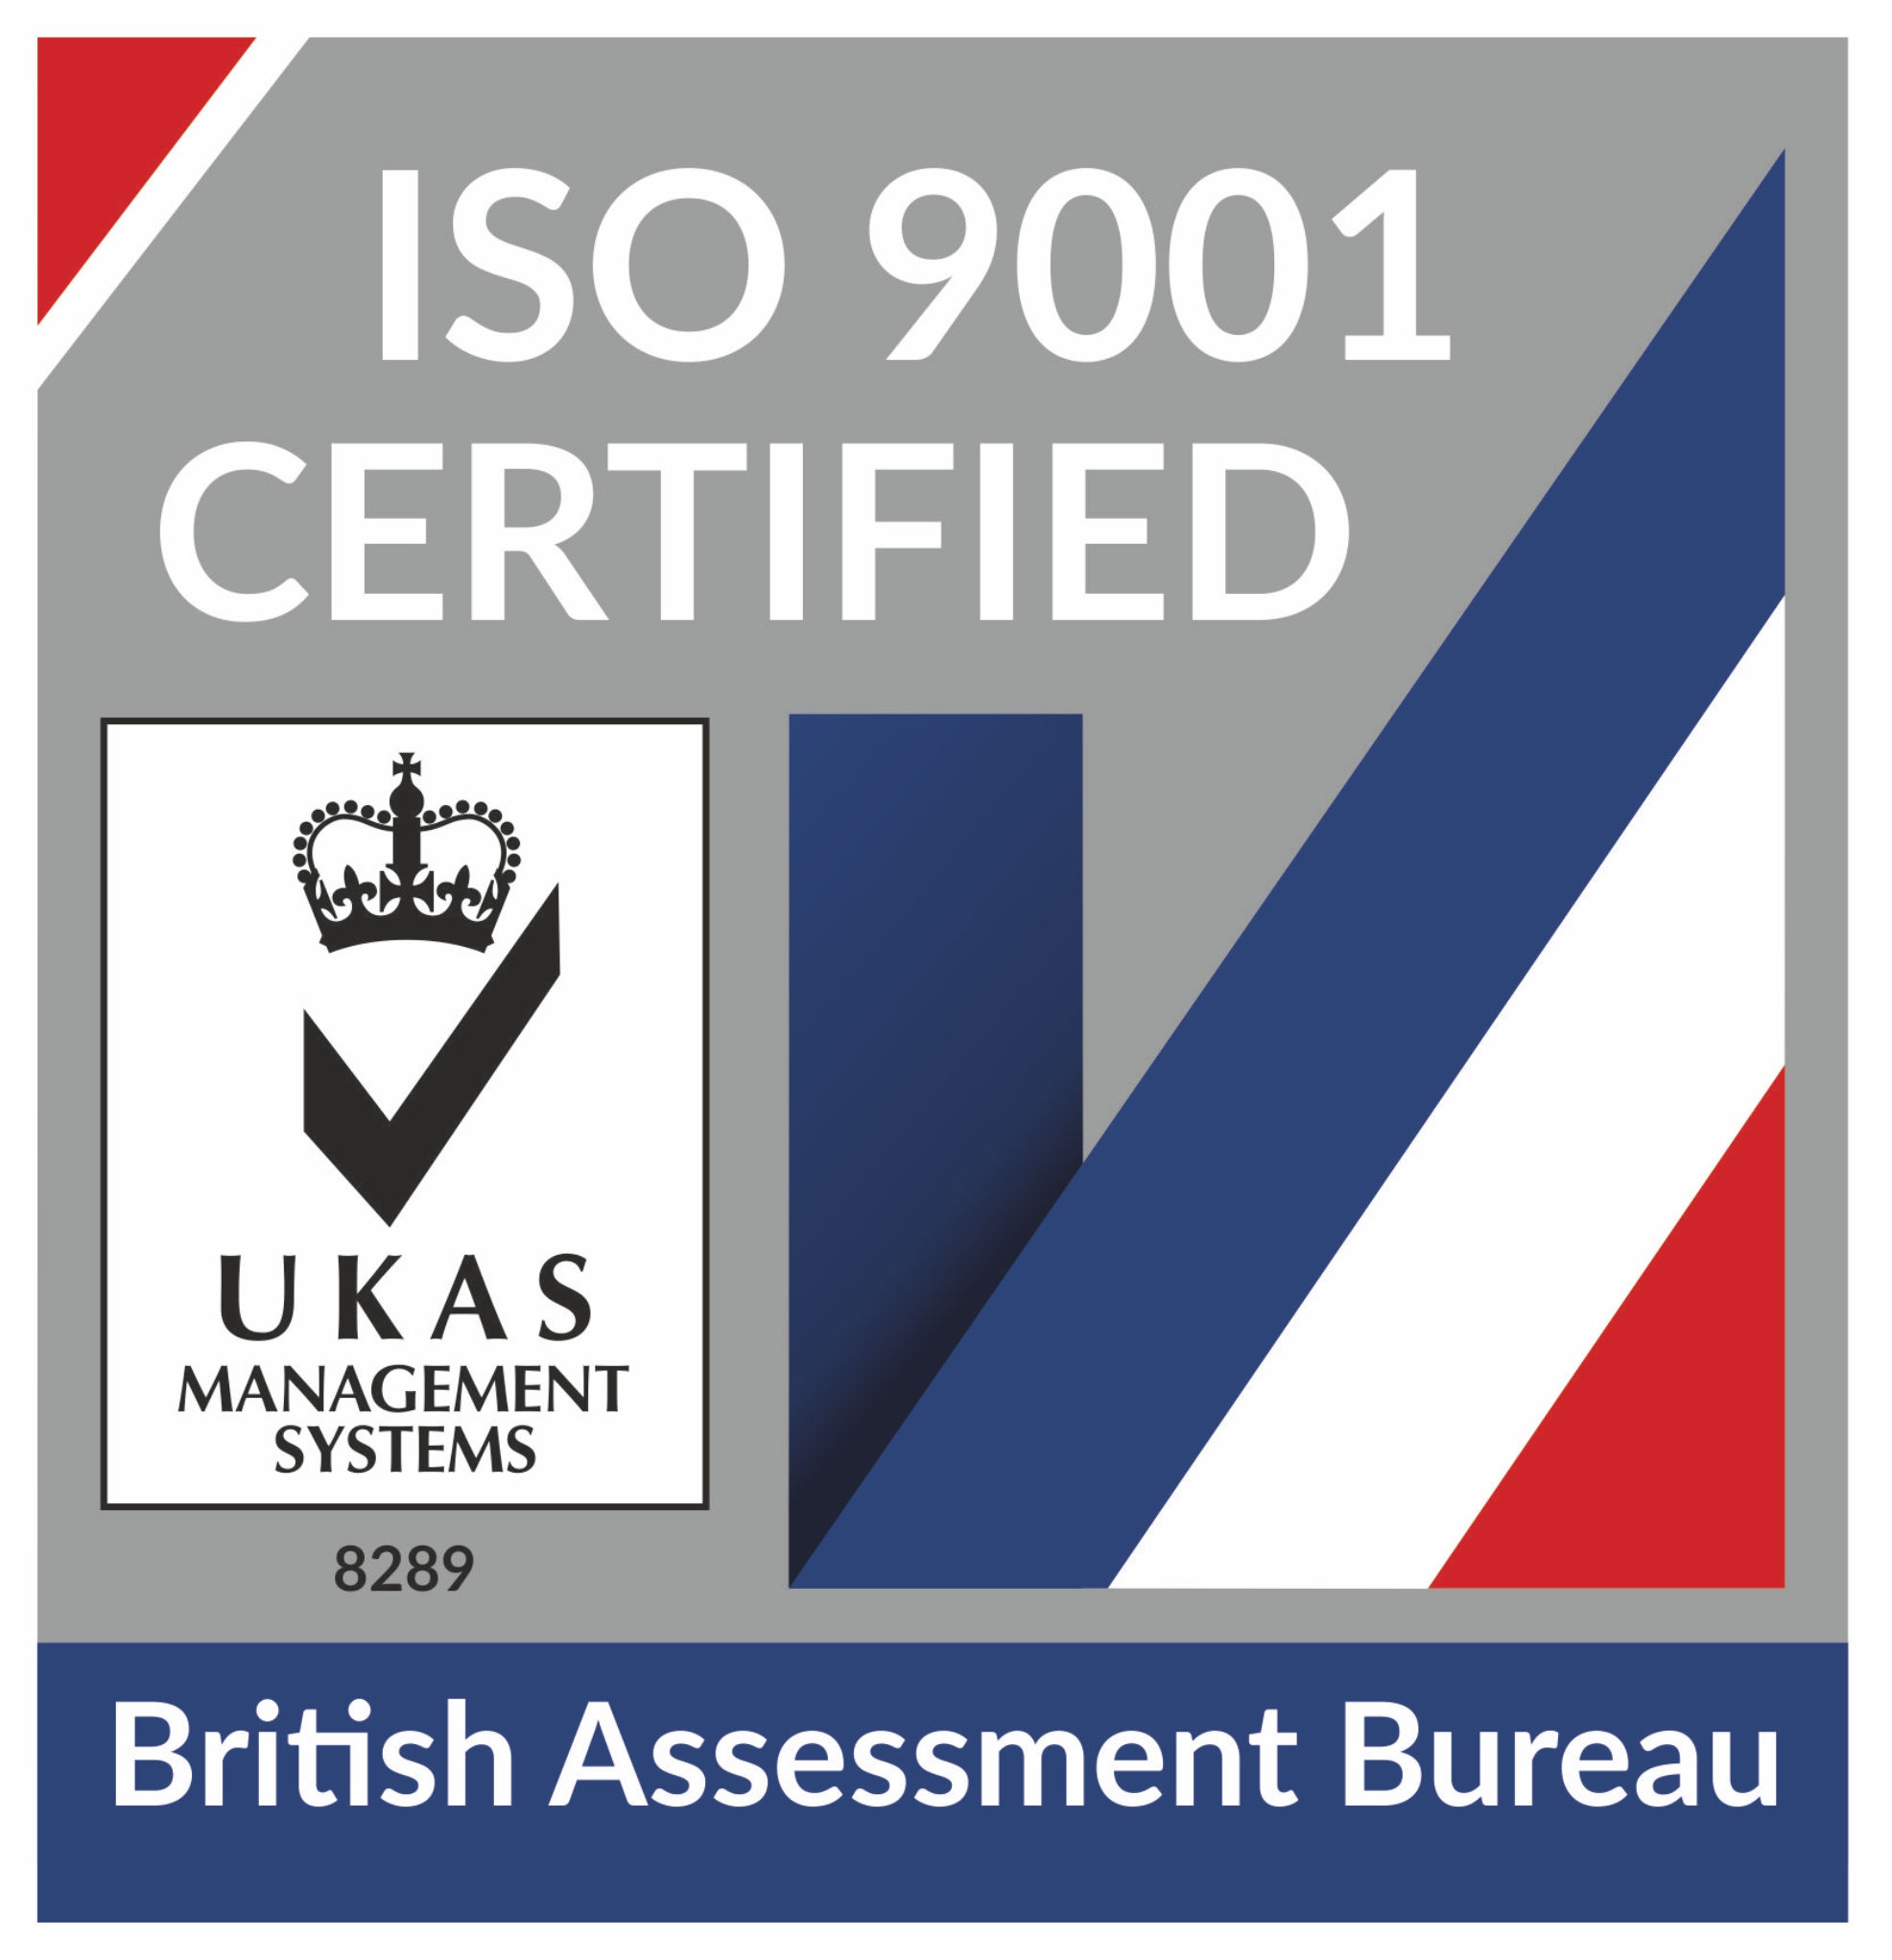 ISO 9001 ukas logo